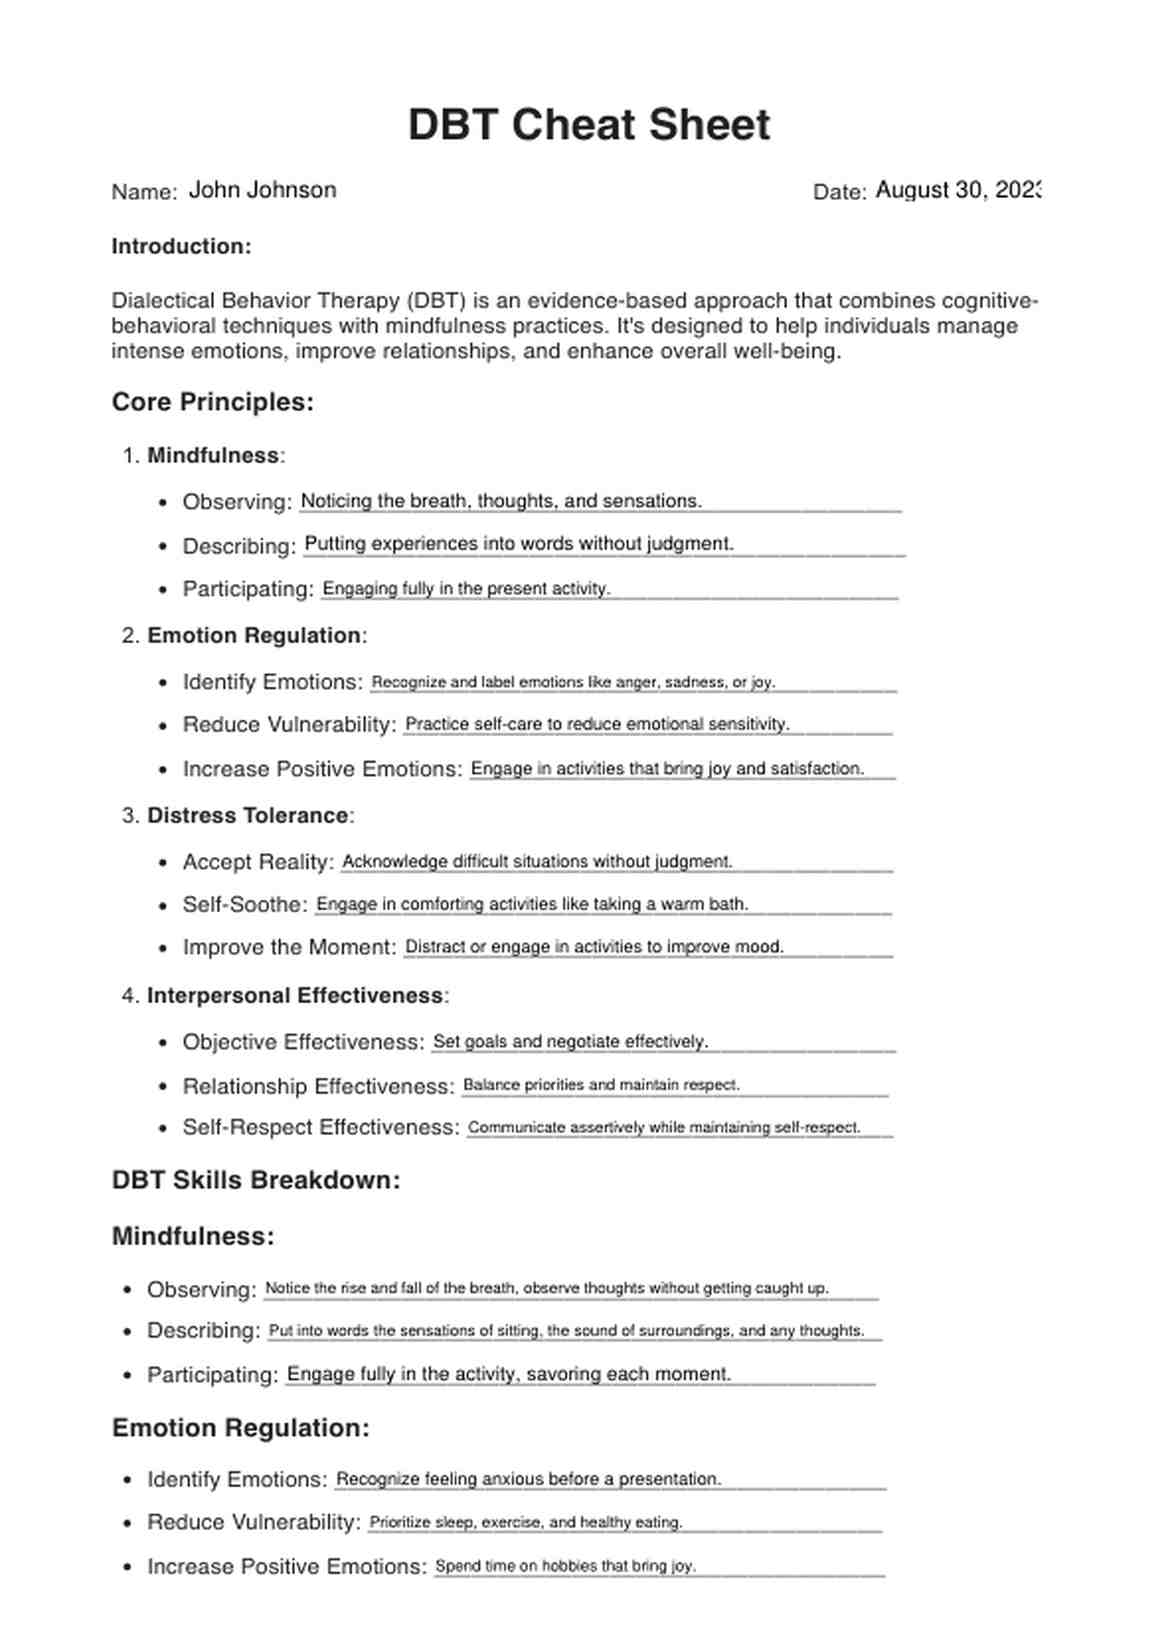 DBT Cheat Sheets PDF Example